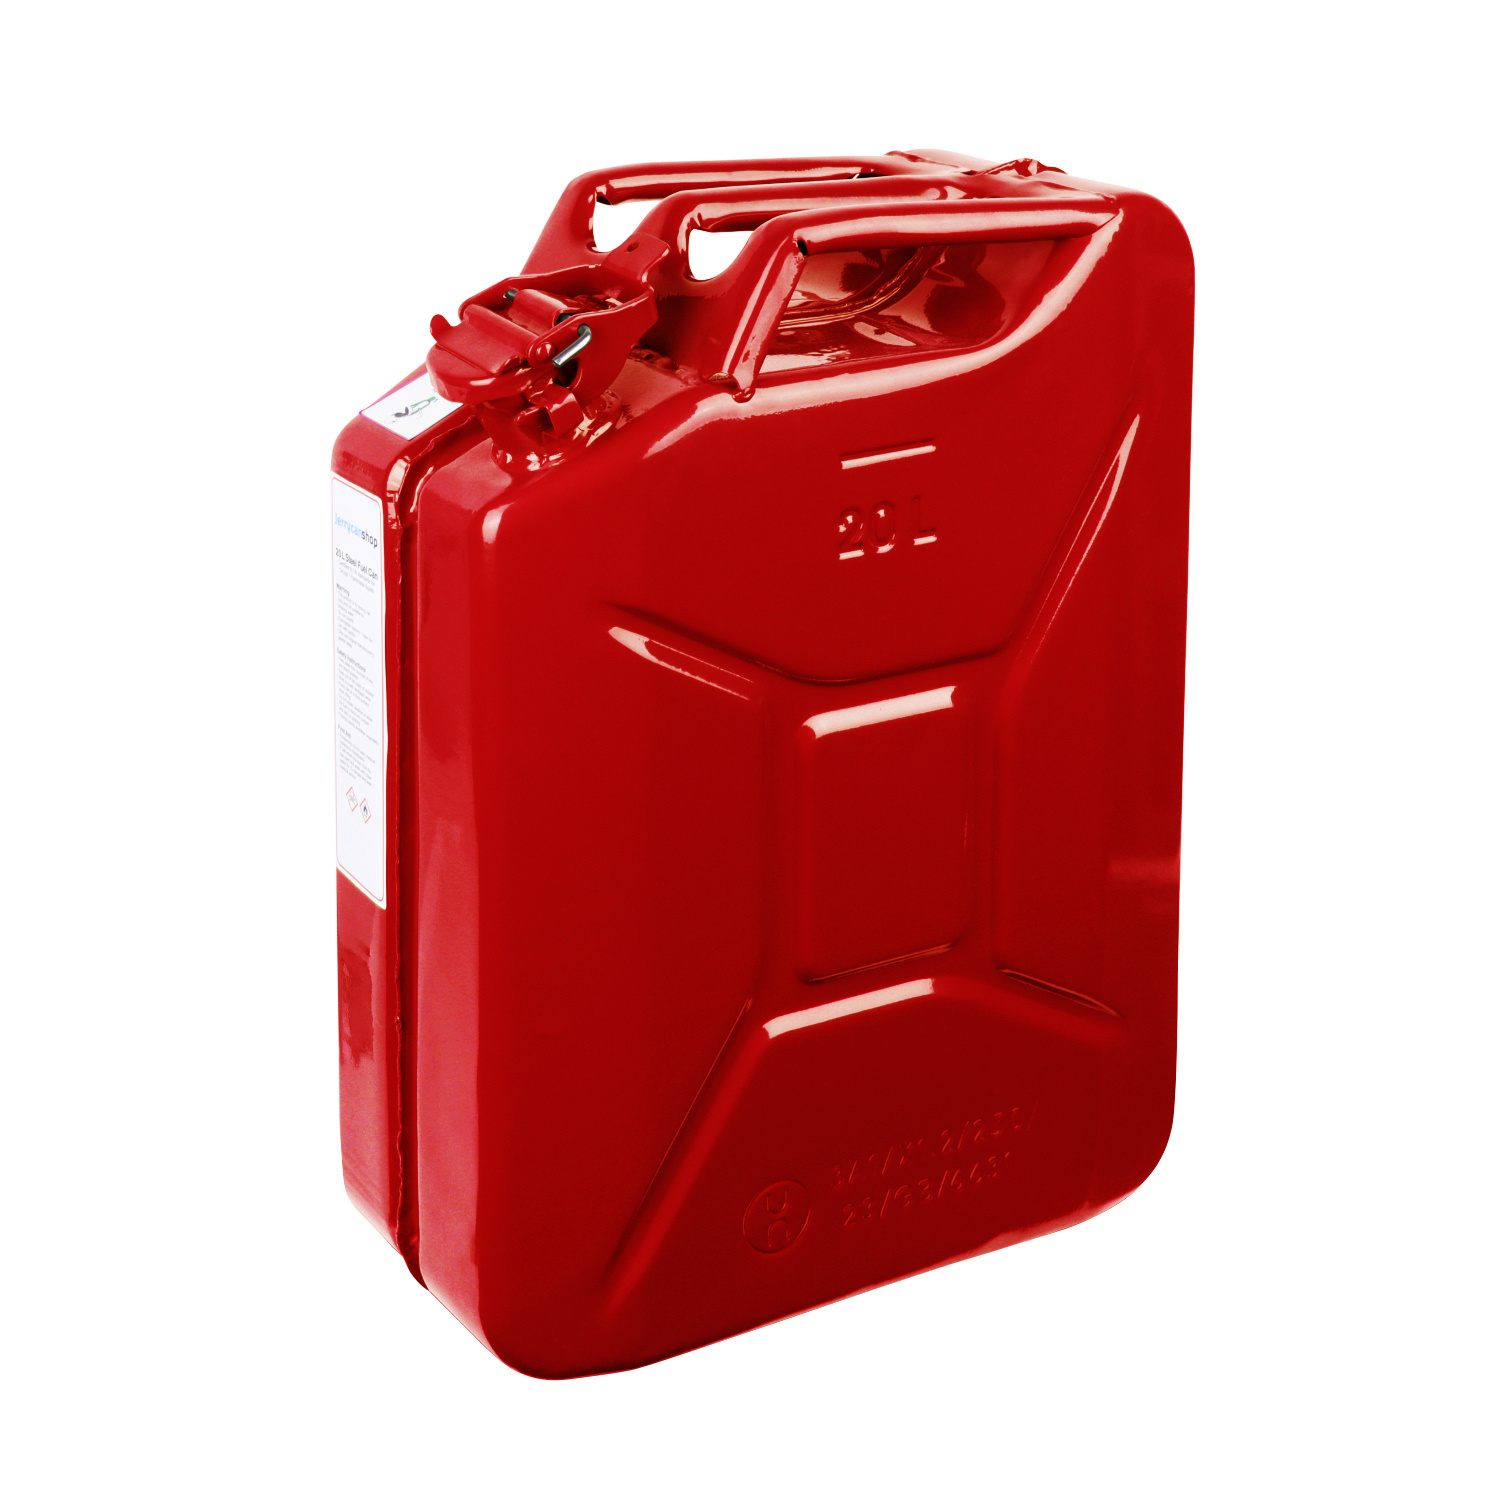 20 liter steel fuel jerrycan - red 